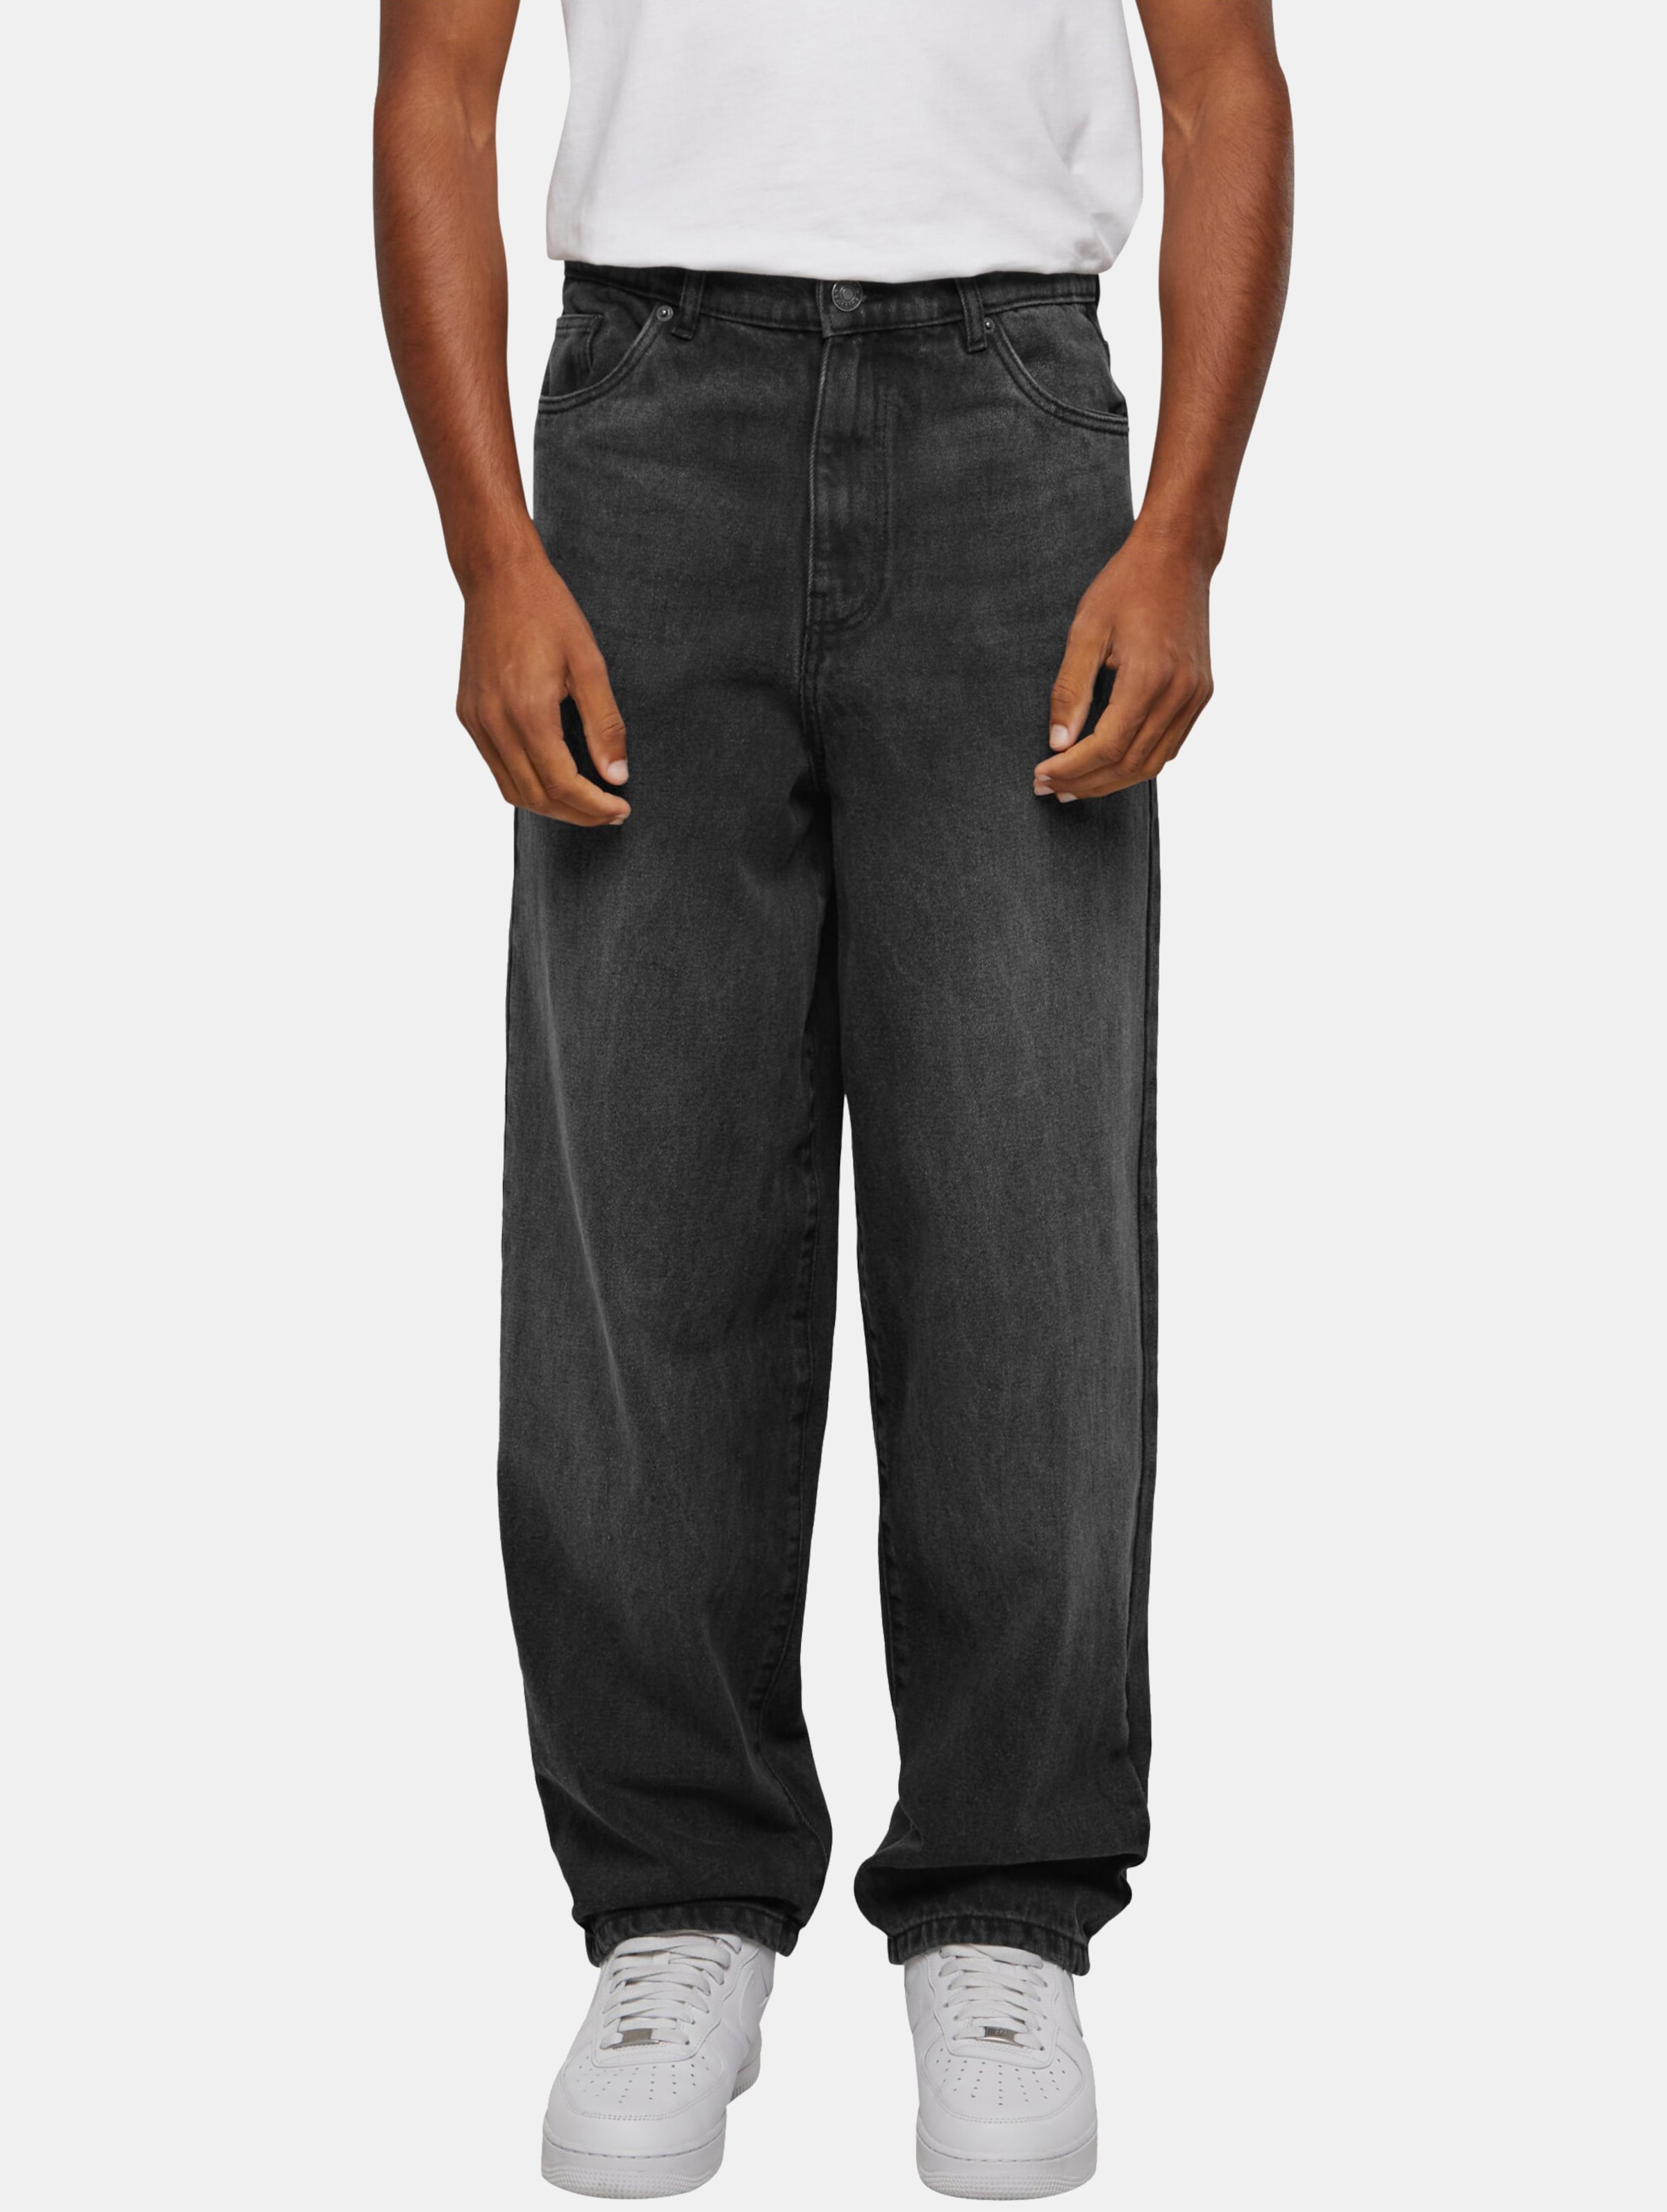 Urban Classics - Heavy Ounce Baggy Fit Jeans Wijde broek - Taille, 32 inch - Zwart